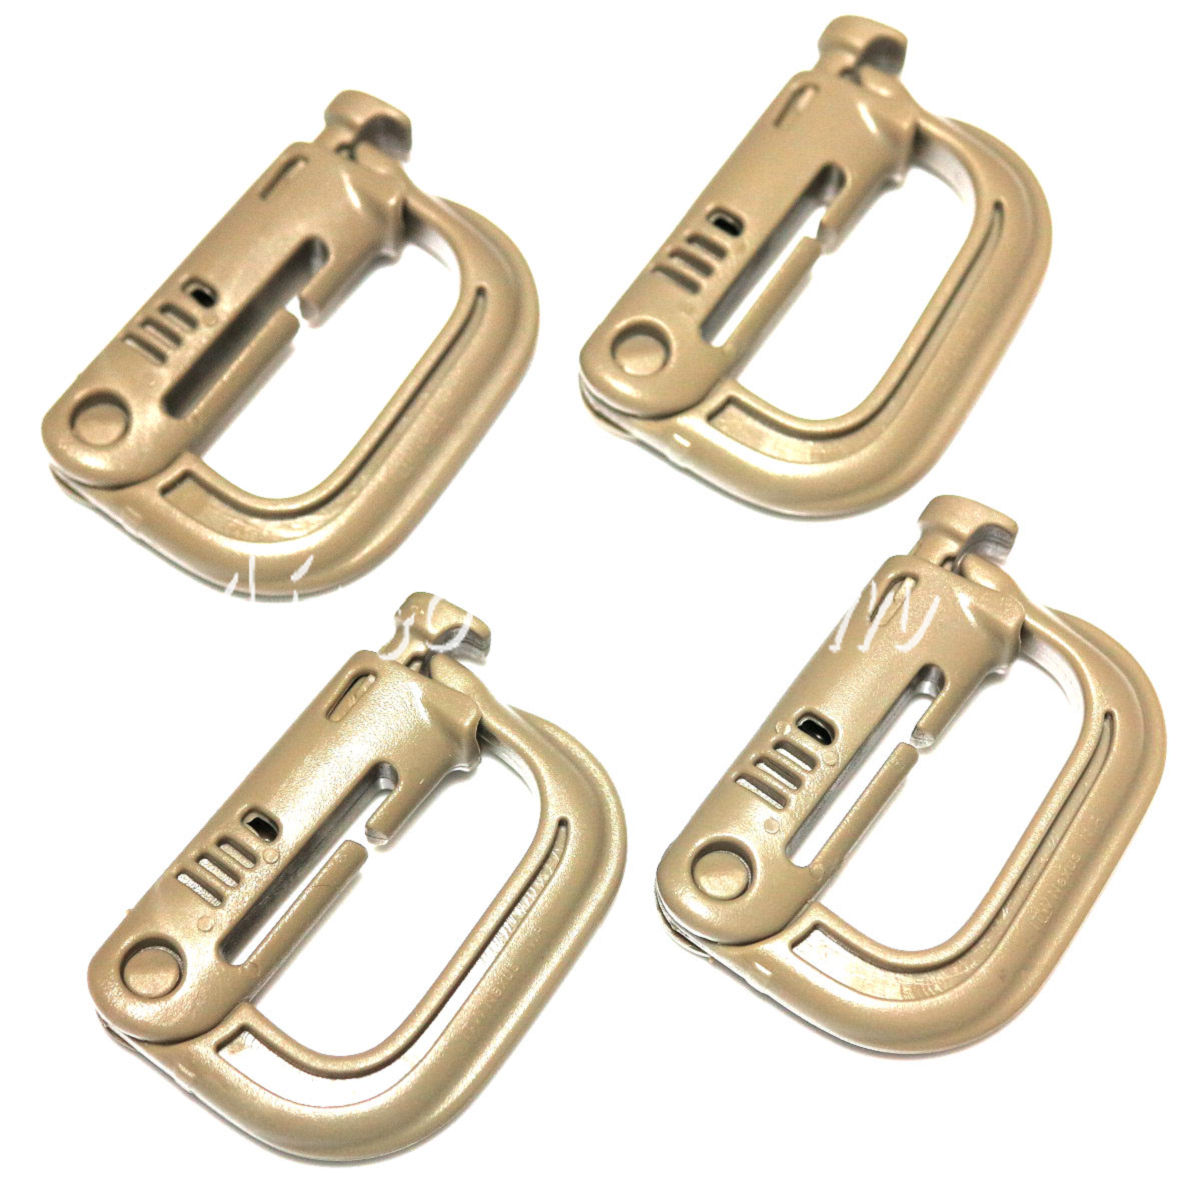 4pcs Pack Grimloc D-Ring Locking Molle Carabiner Light Tan